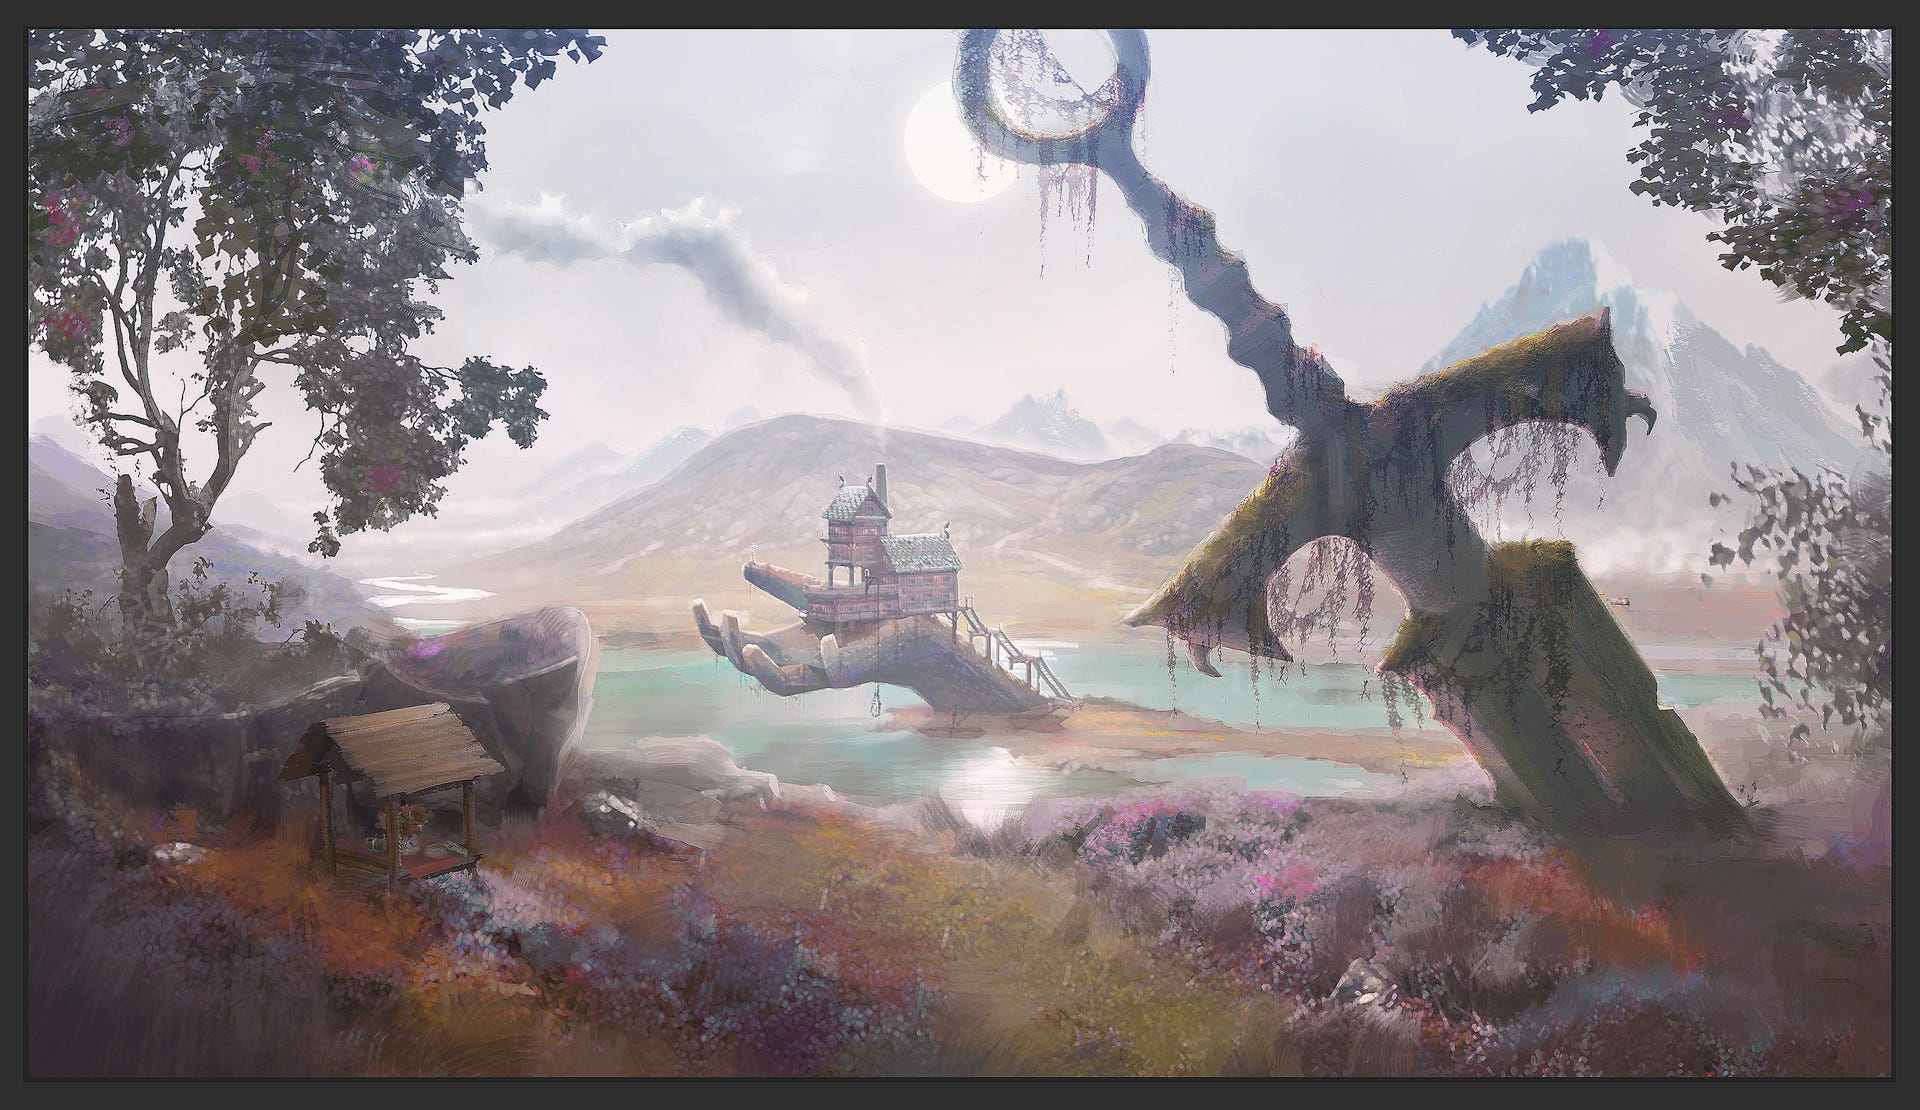 ArtStation - Another Fantasy Landscape, Michael Kelly